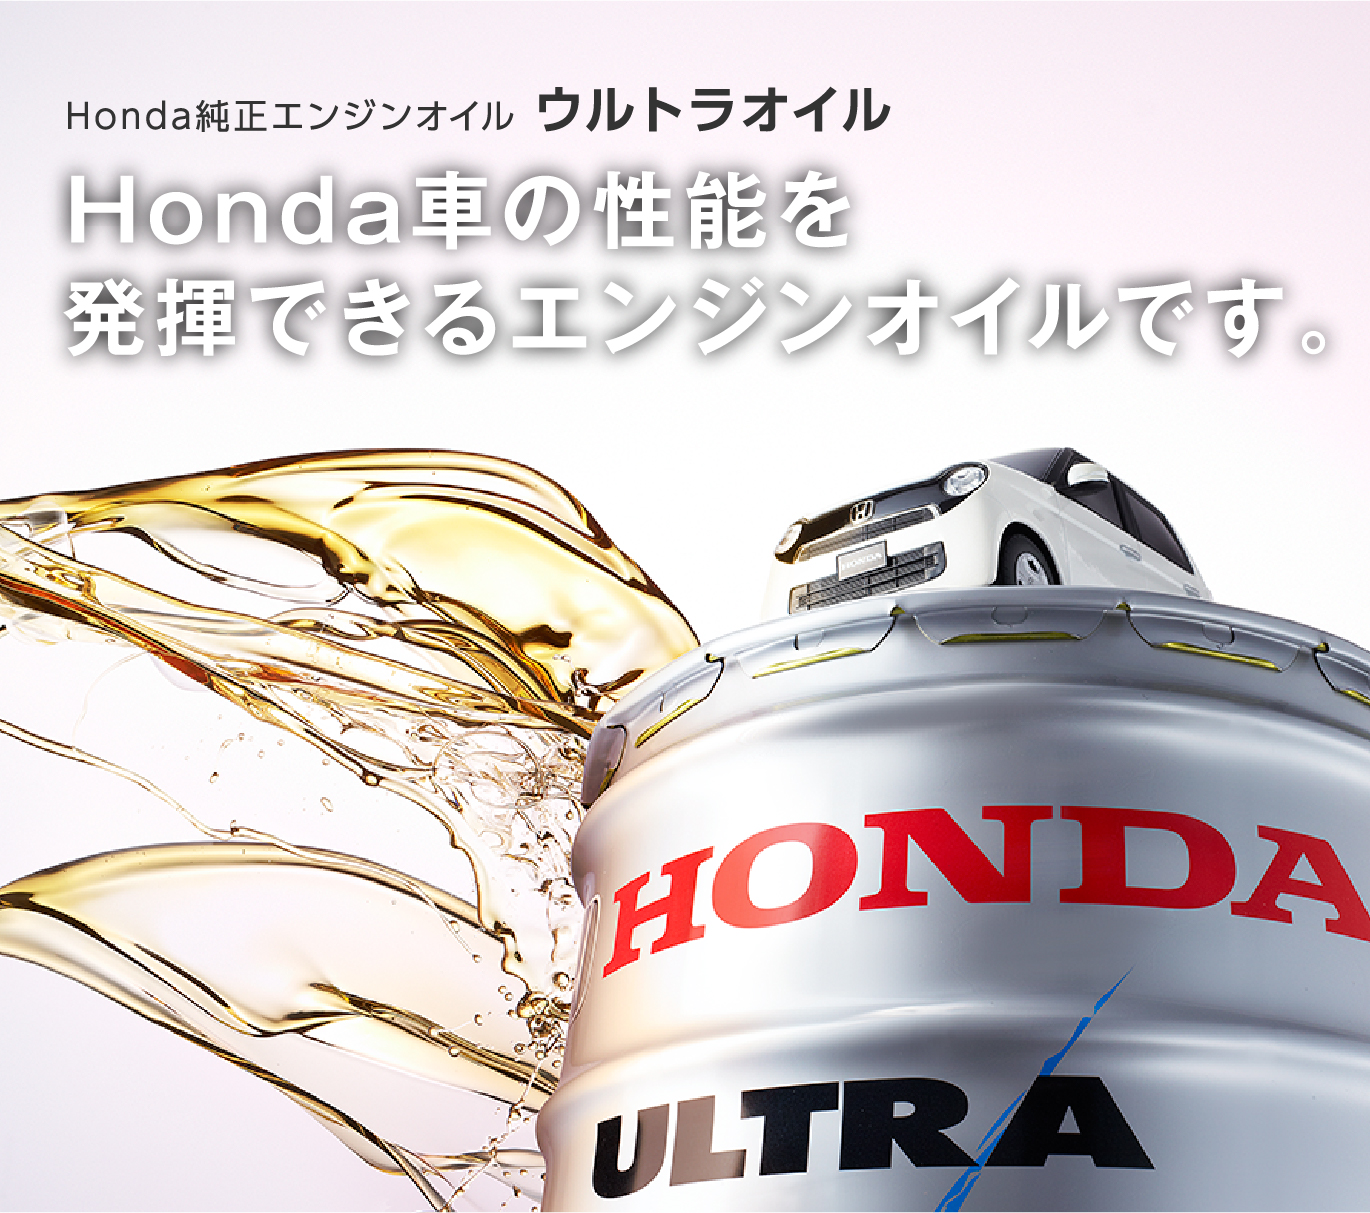 Honda純正エンジンオイル ウルトラオイル